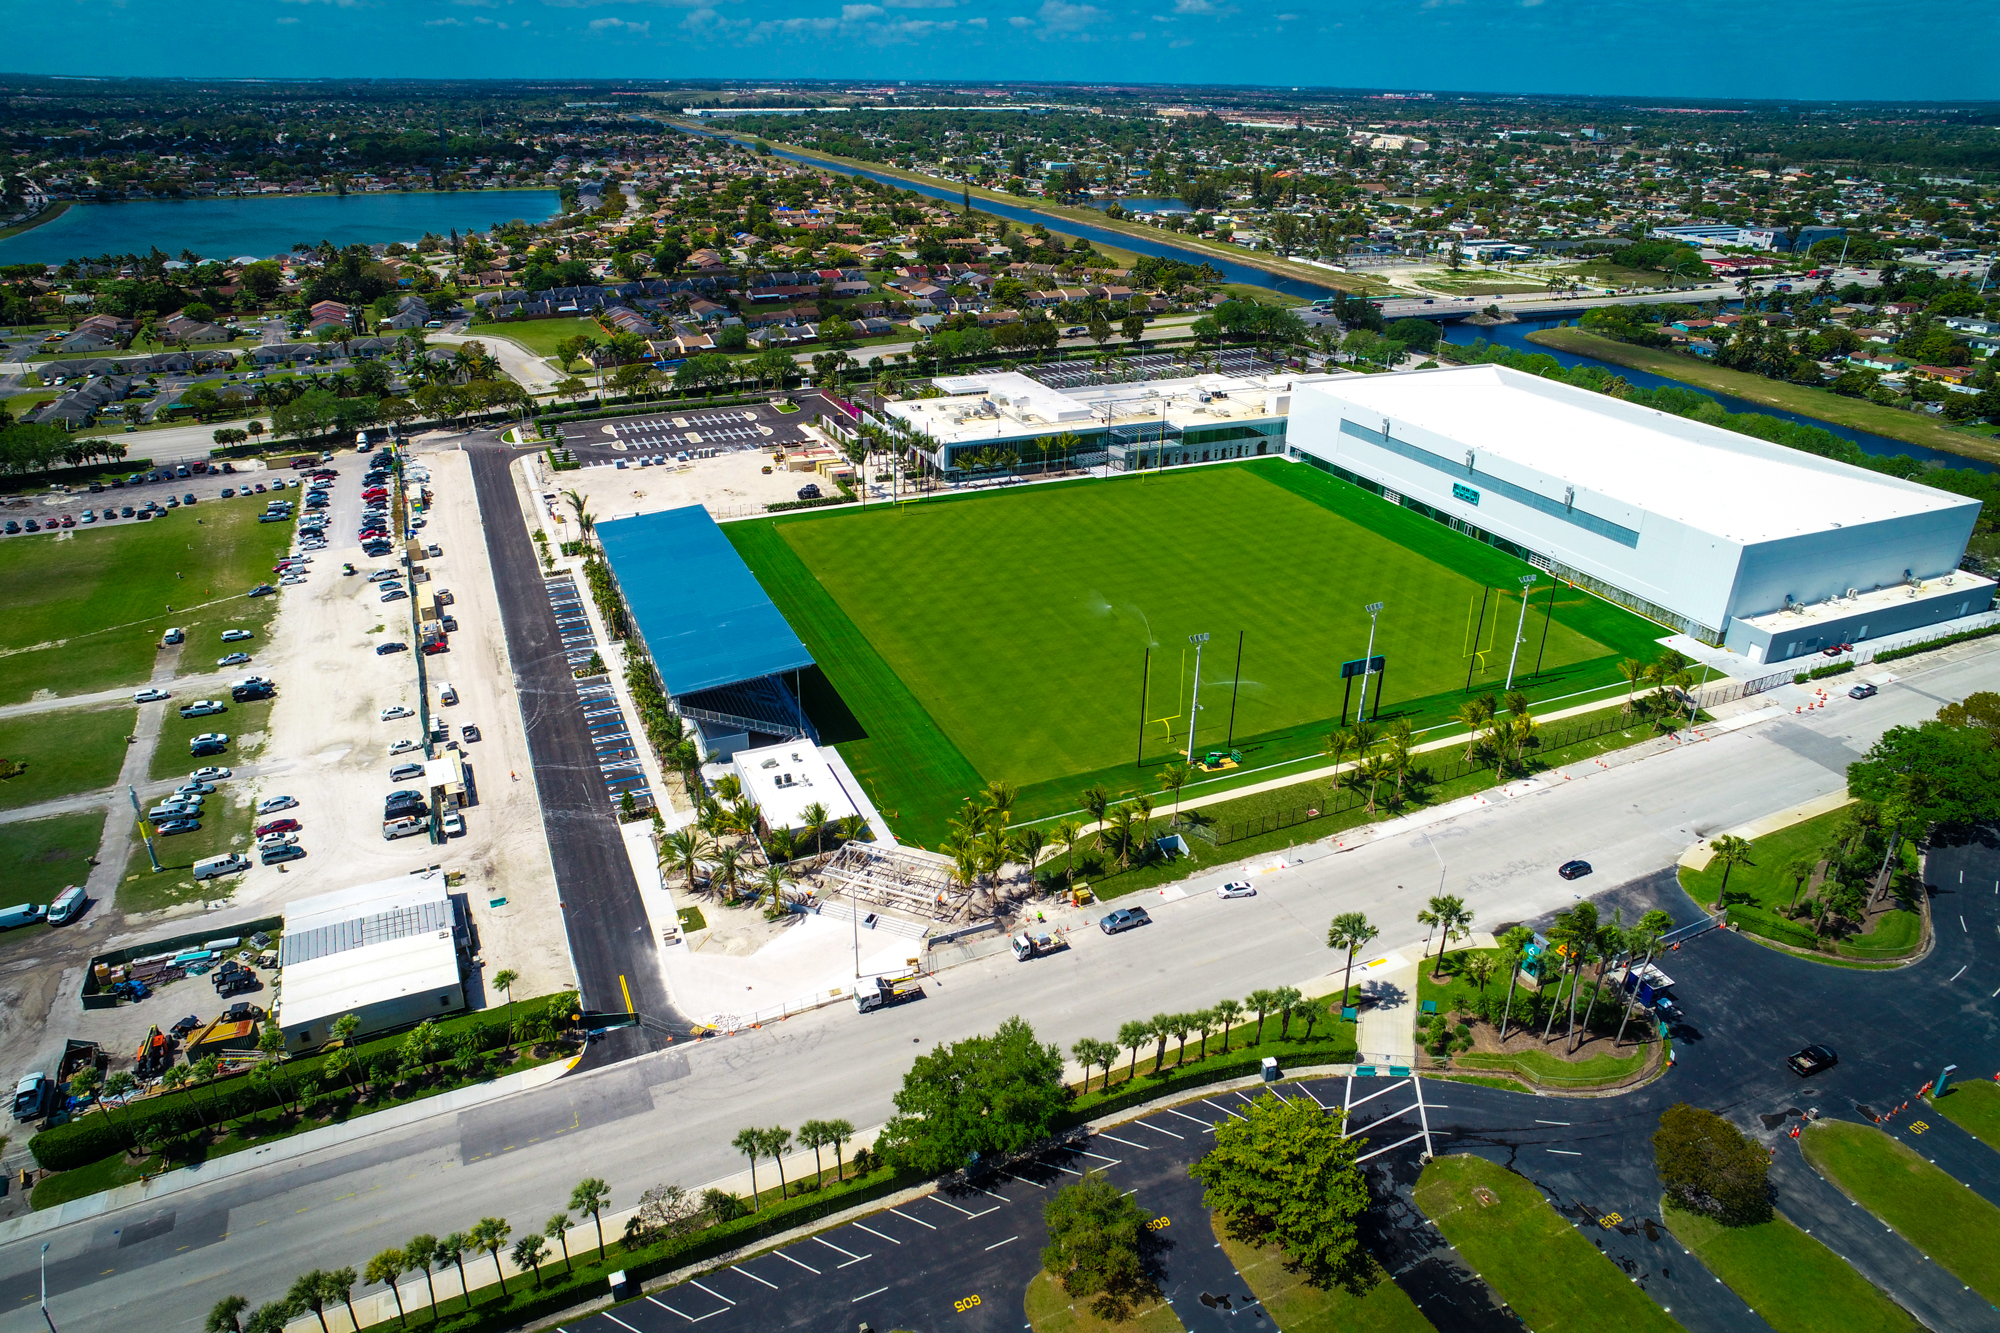 2021-03-12-8679-Miami-Dolphins-Practice-Facility-14.jpg